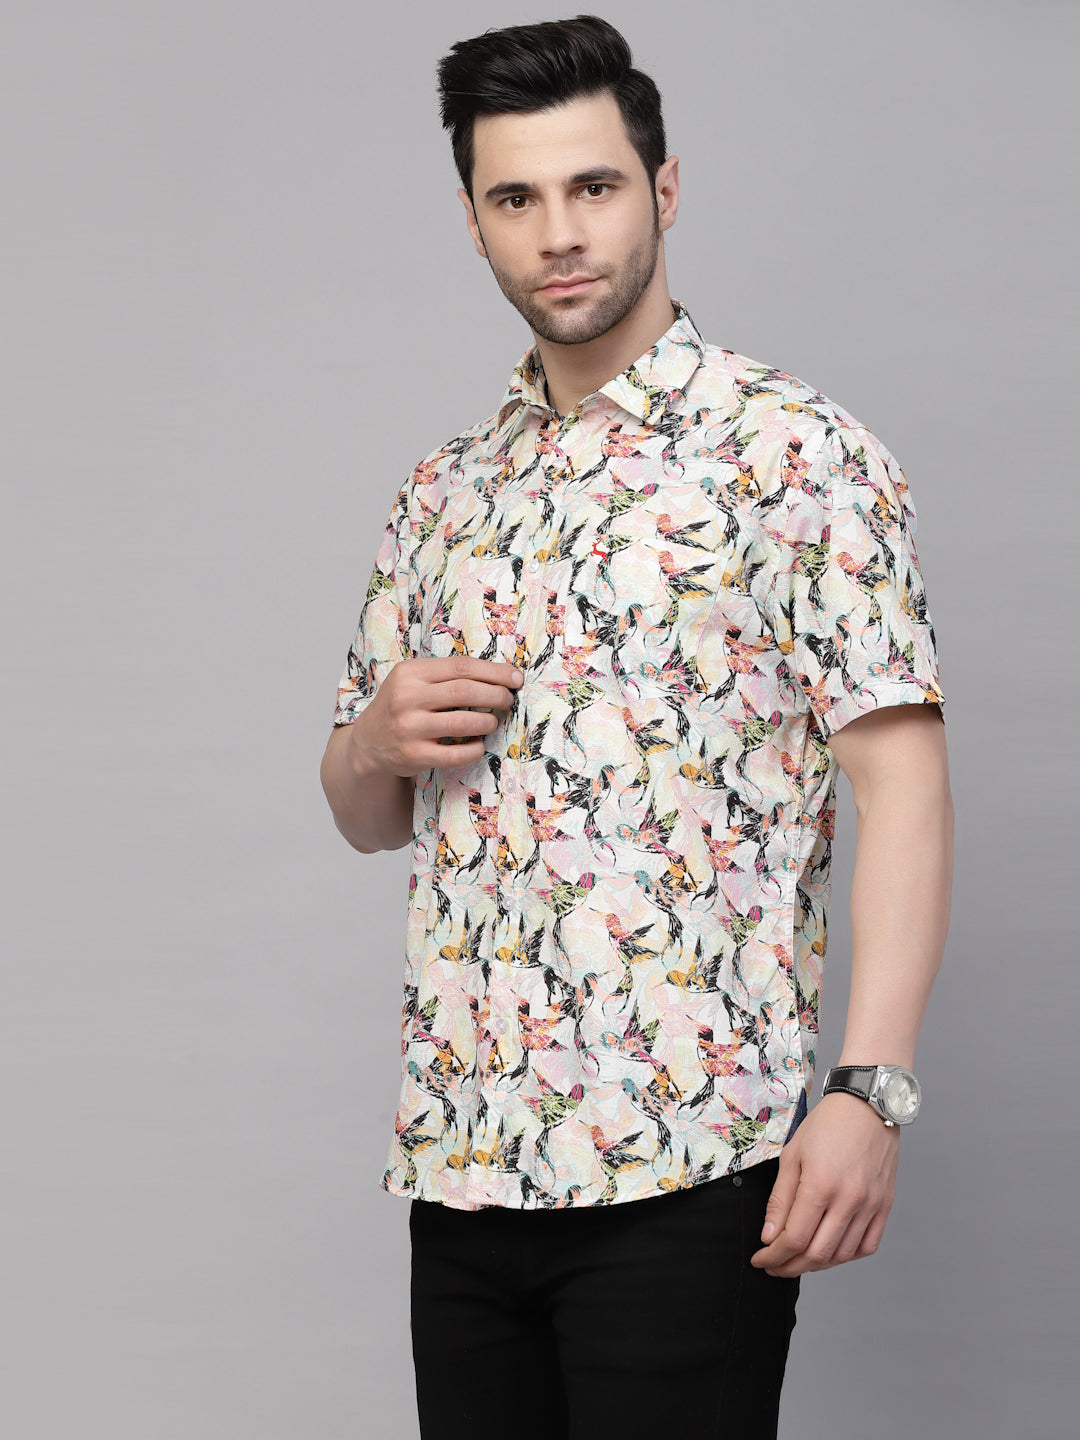 Valbone Men’s Digital Print Regular Fit Baird's Printed Casual Shirt Half Sleeves